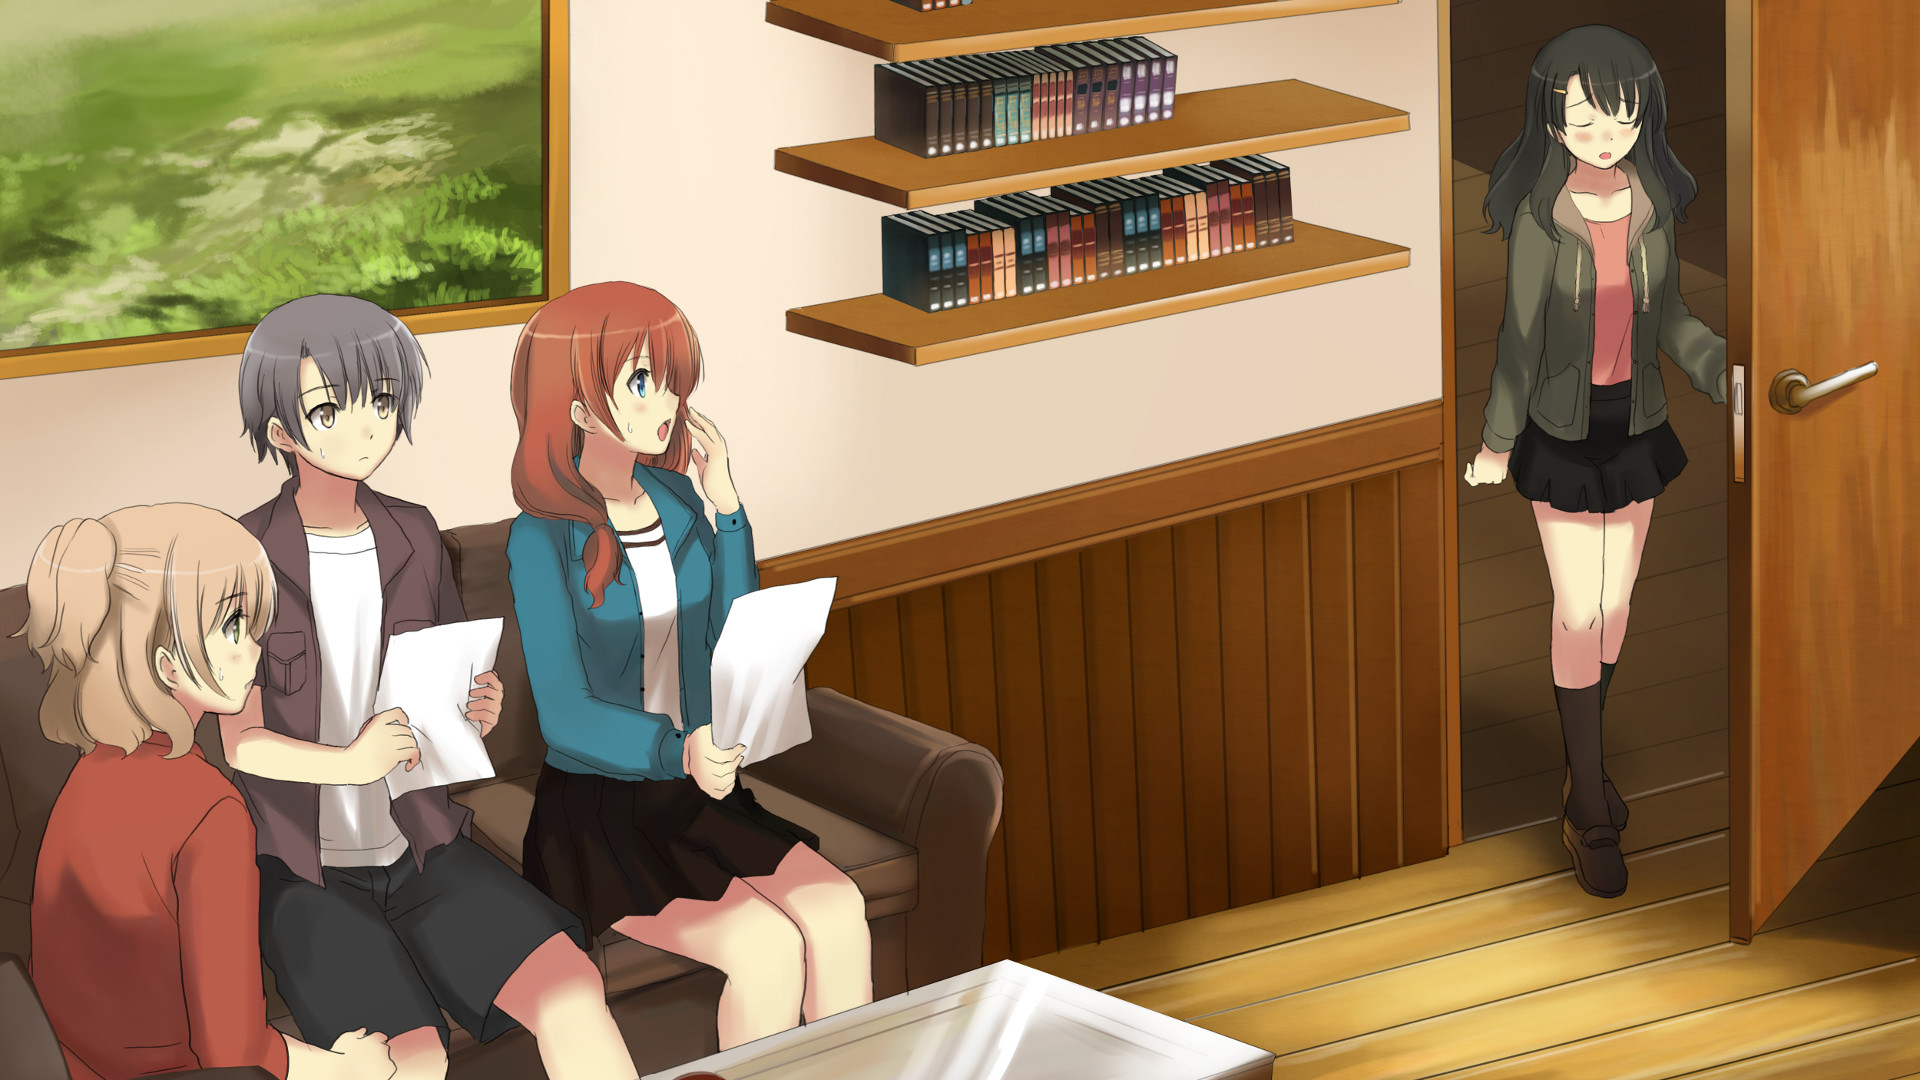 Anime Studio Simulator on Steam